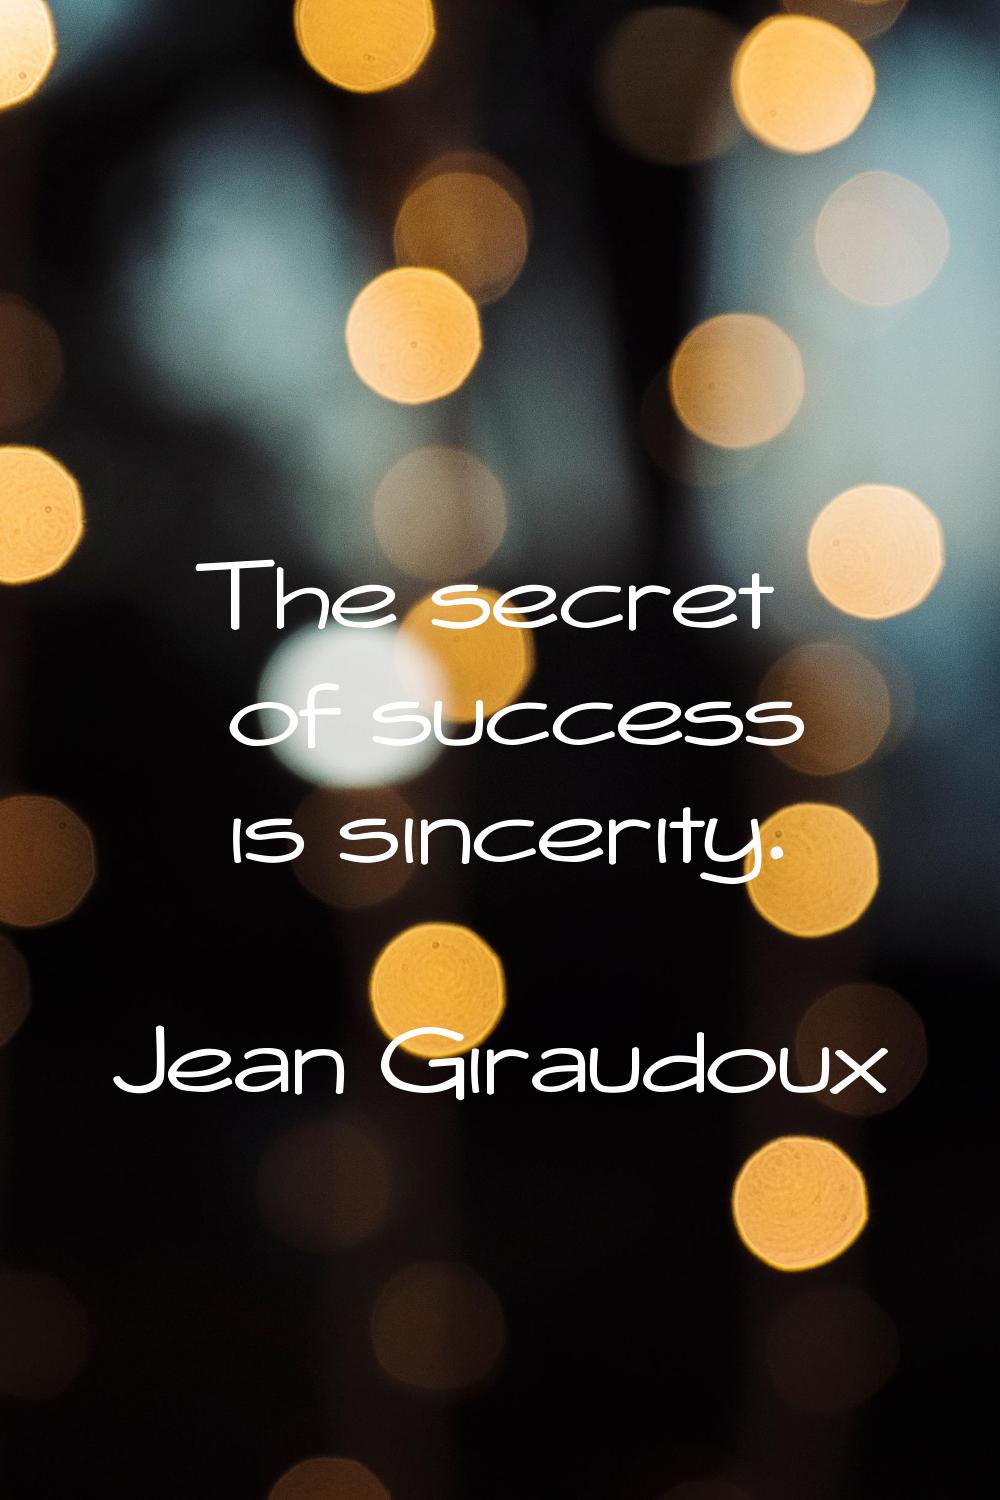 The secret of success is sincerity.